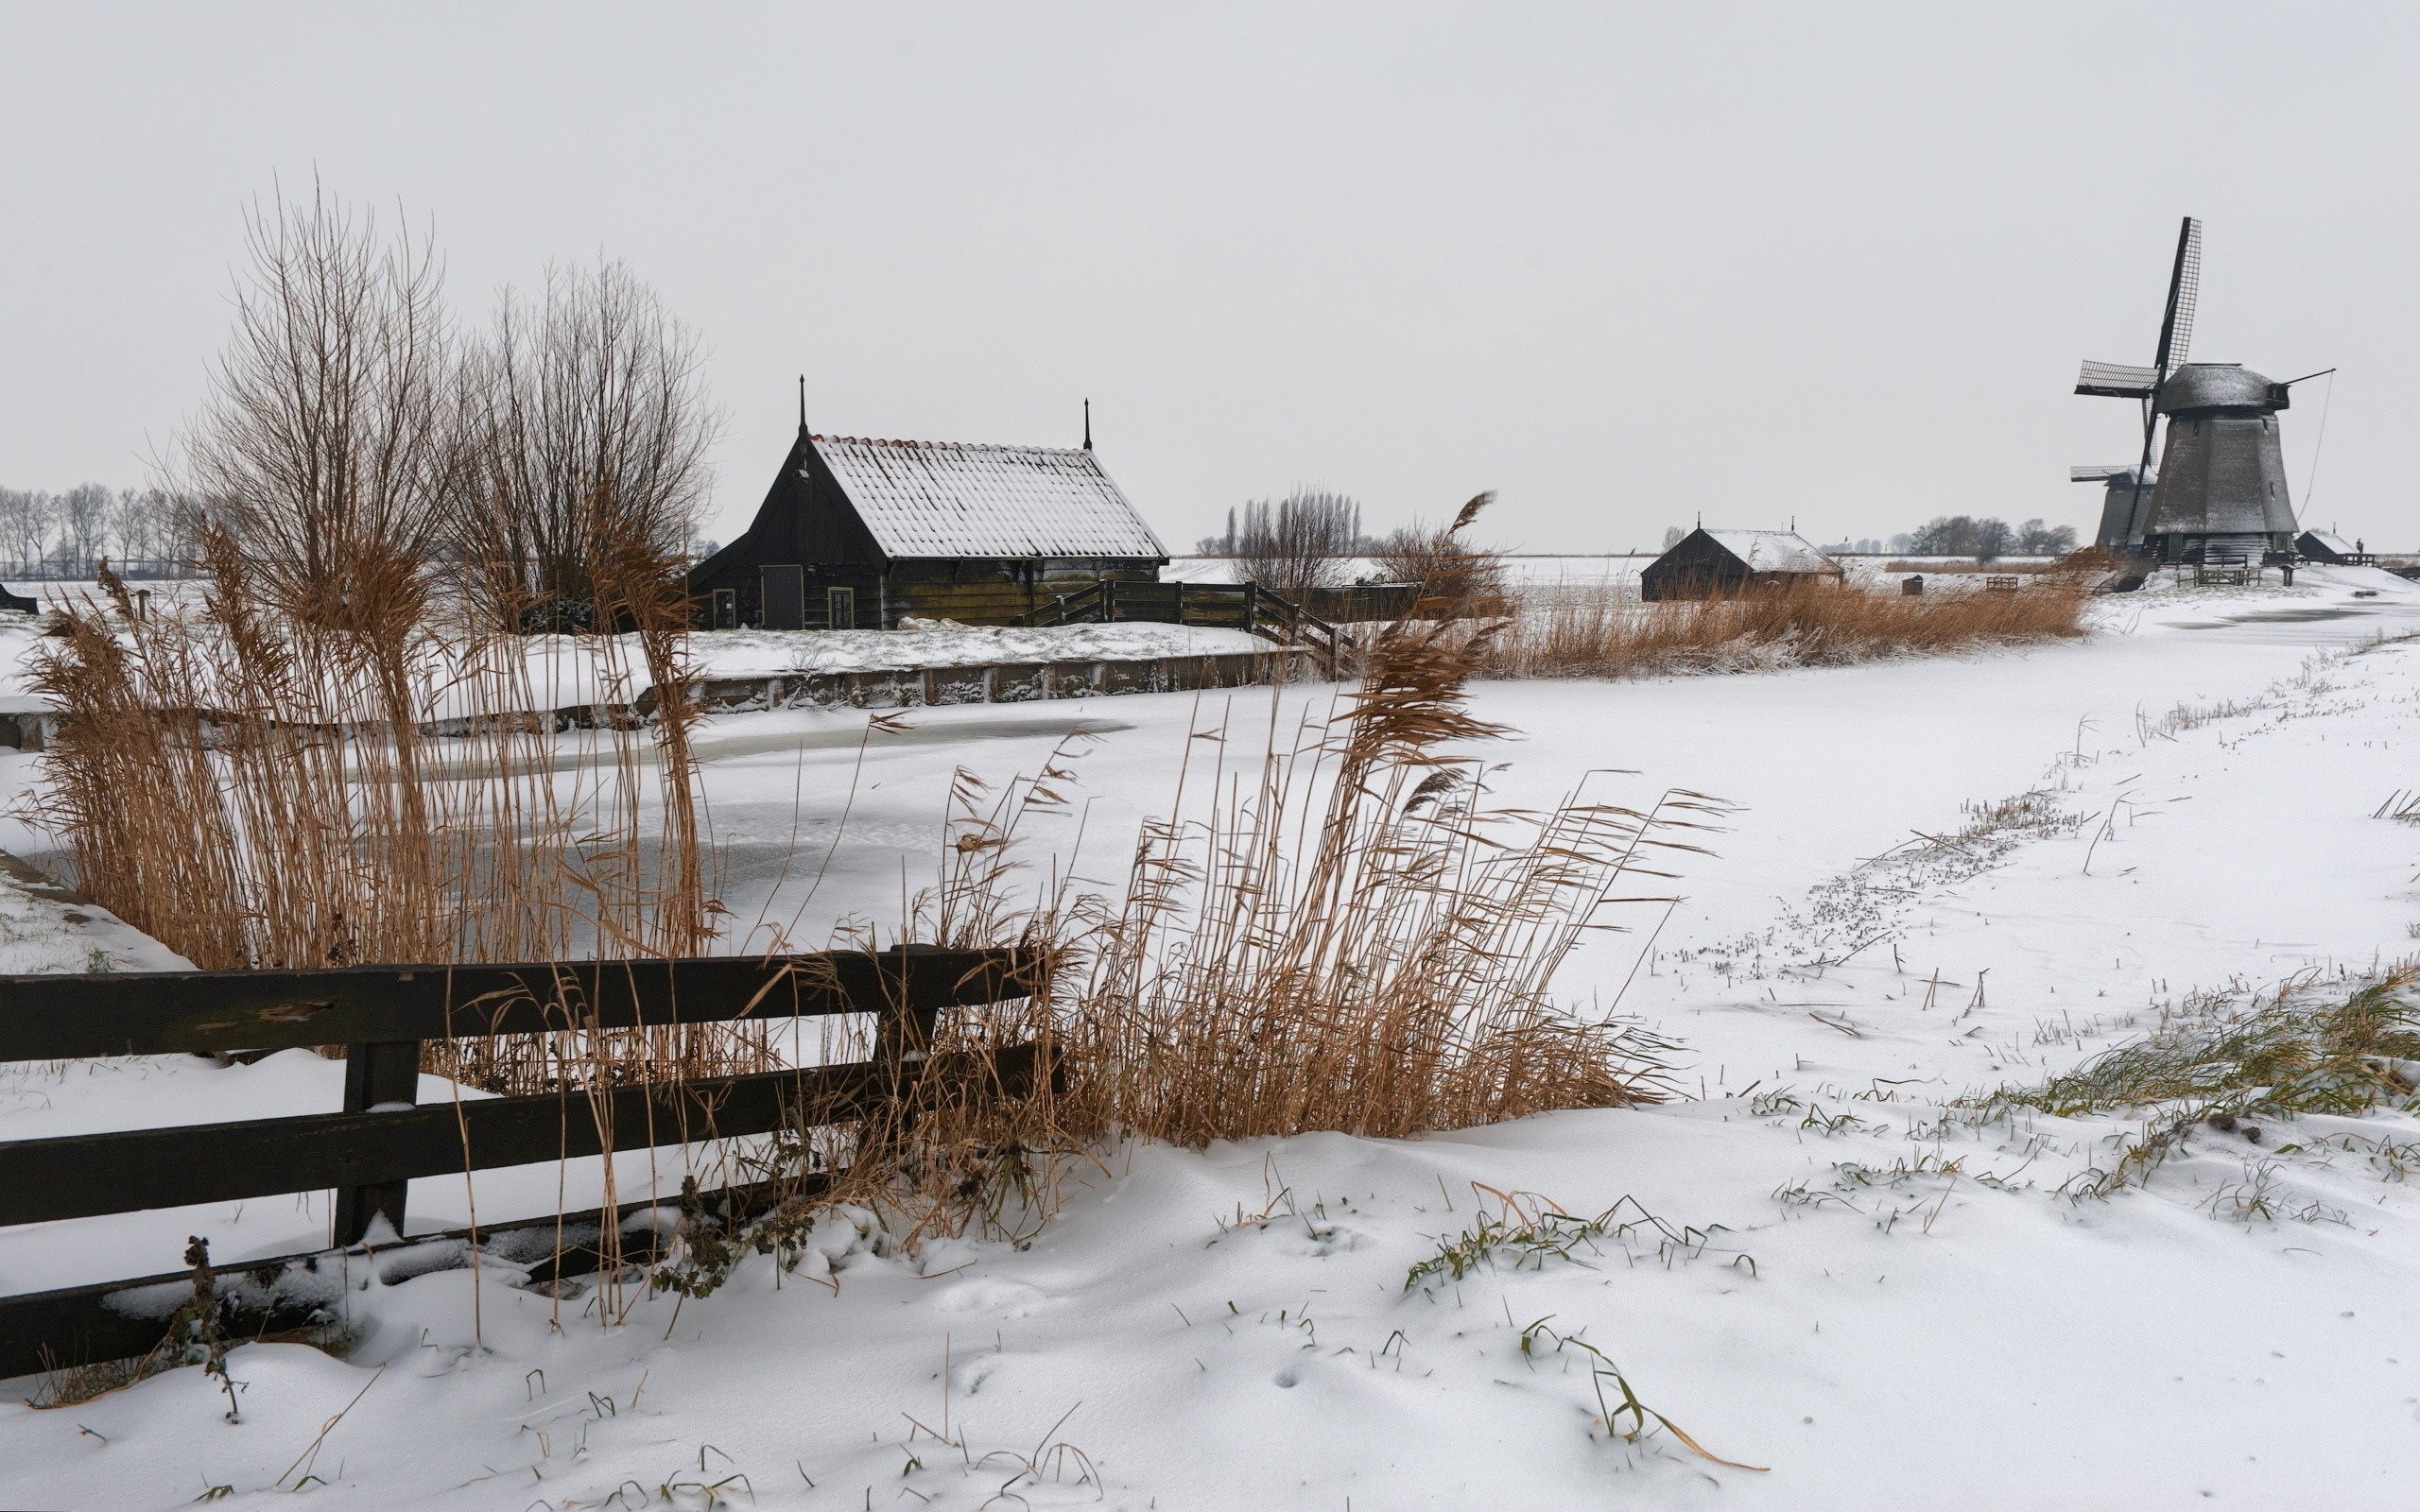 General 2560x1600 winter Russia village landscape windmill snow mist river overcast fence